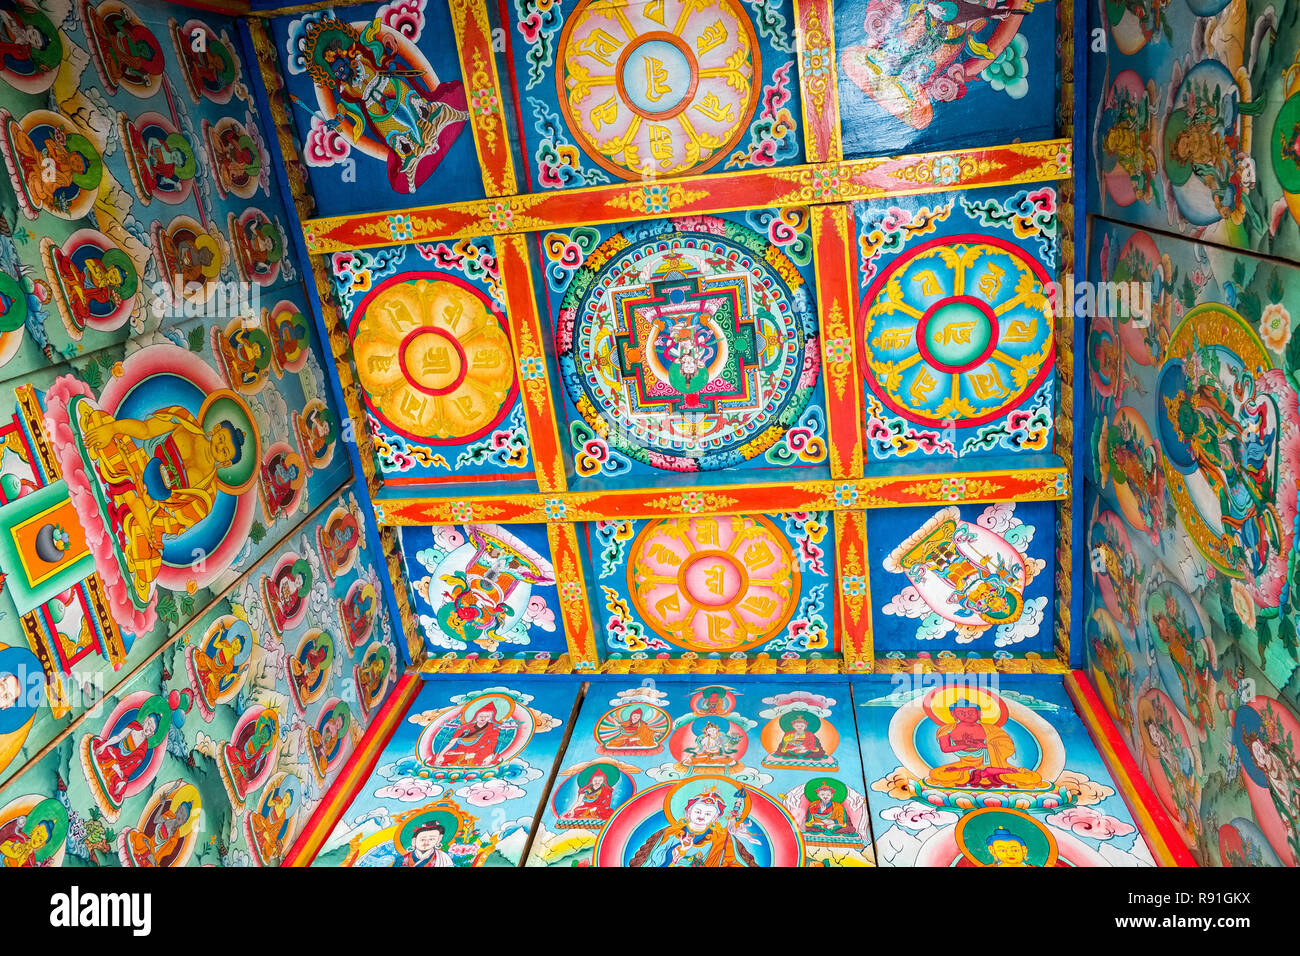 Highly decorative paintings of mandalas inside a Tibetan Kani (village entrance arch ), Nepal Stock Photo